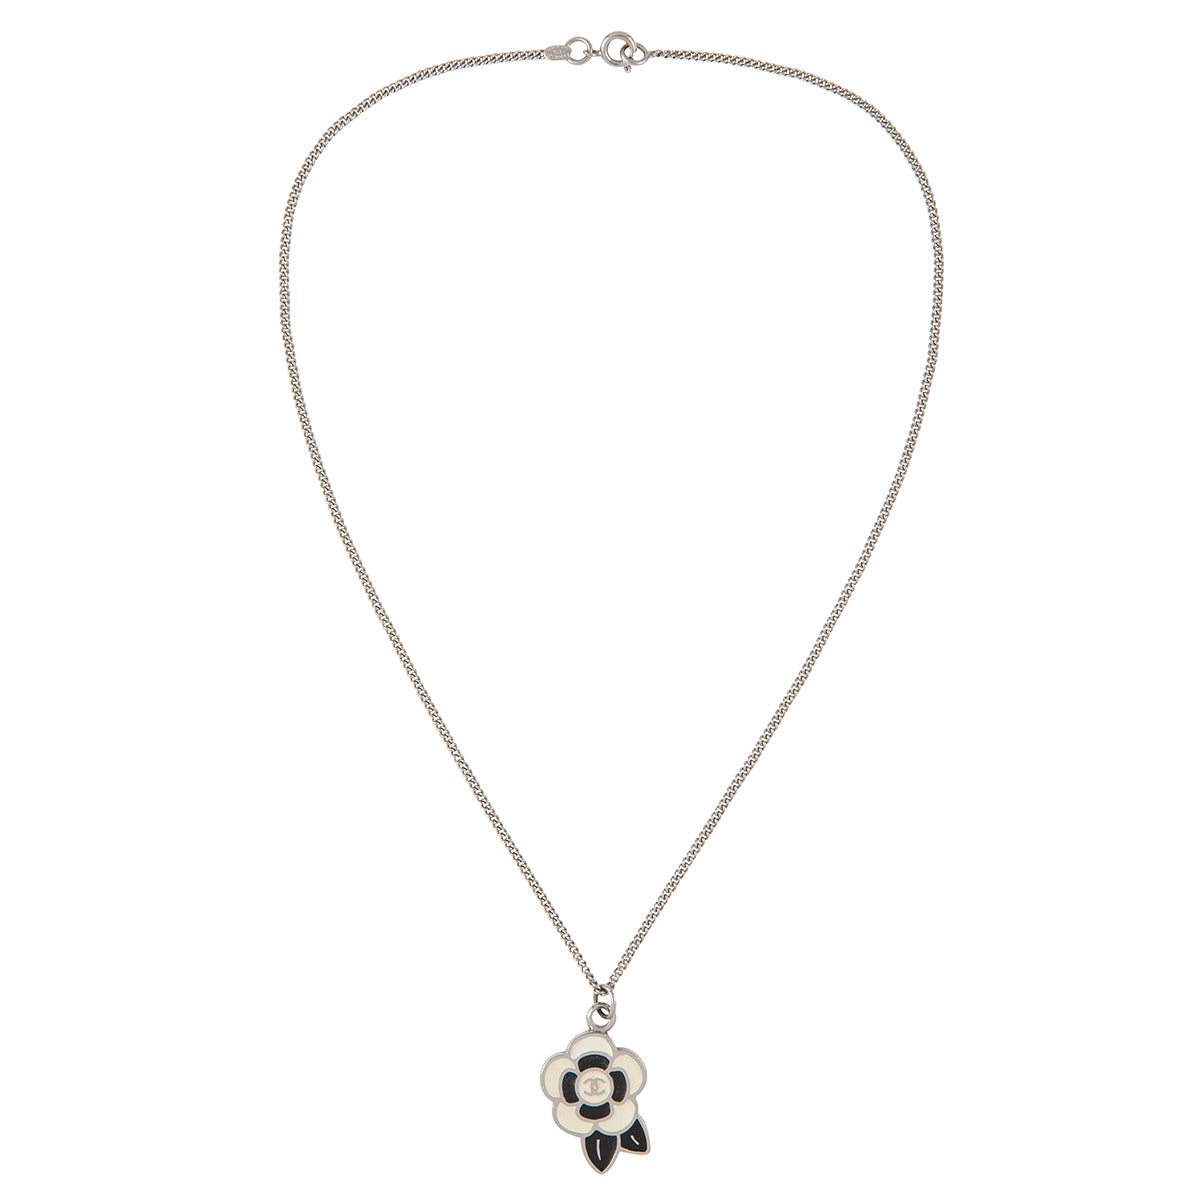 2005 Chanel Camellia Pendant Necklace